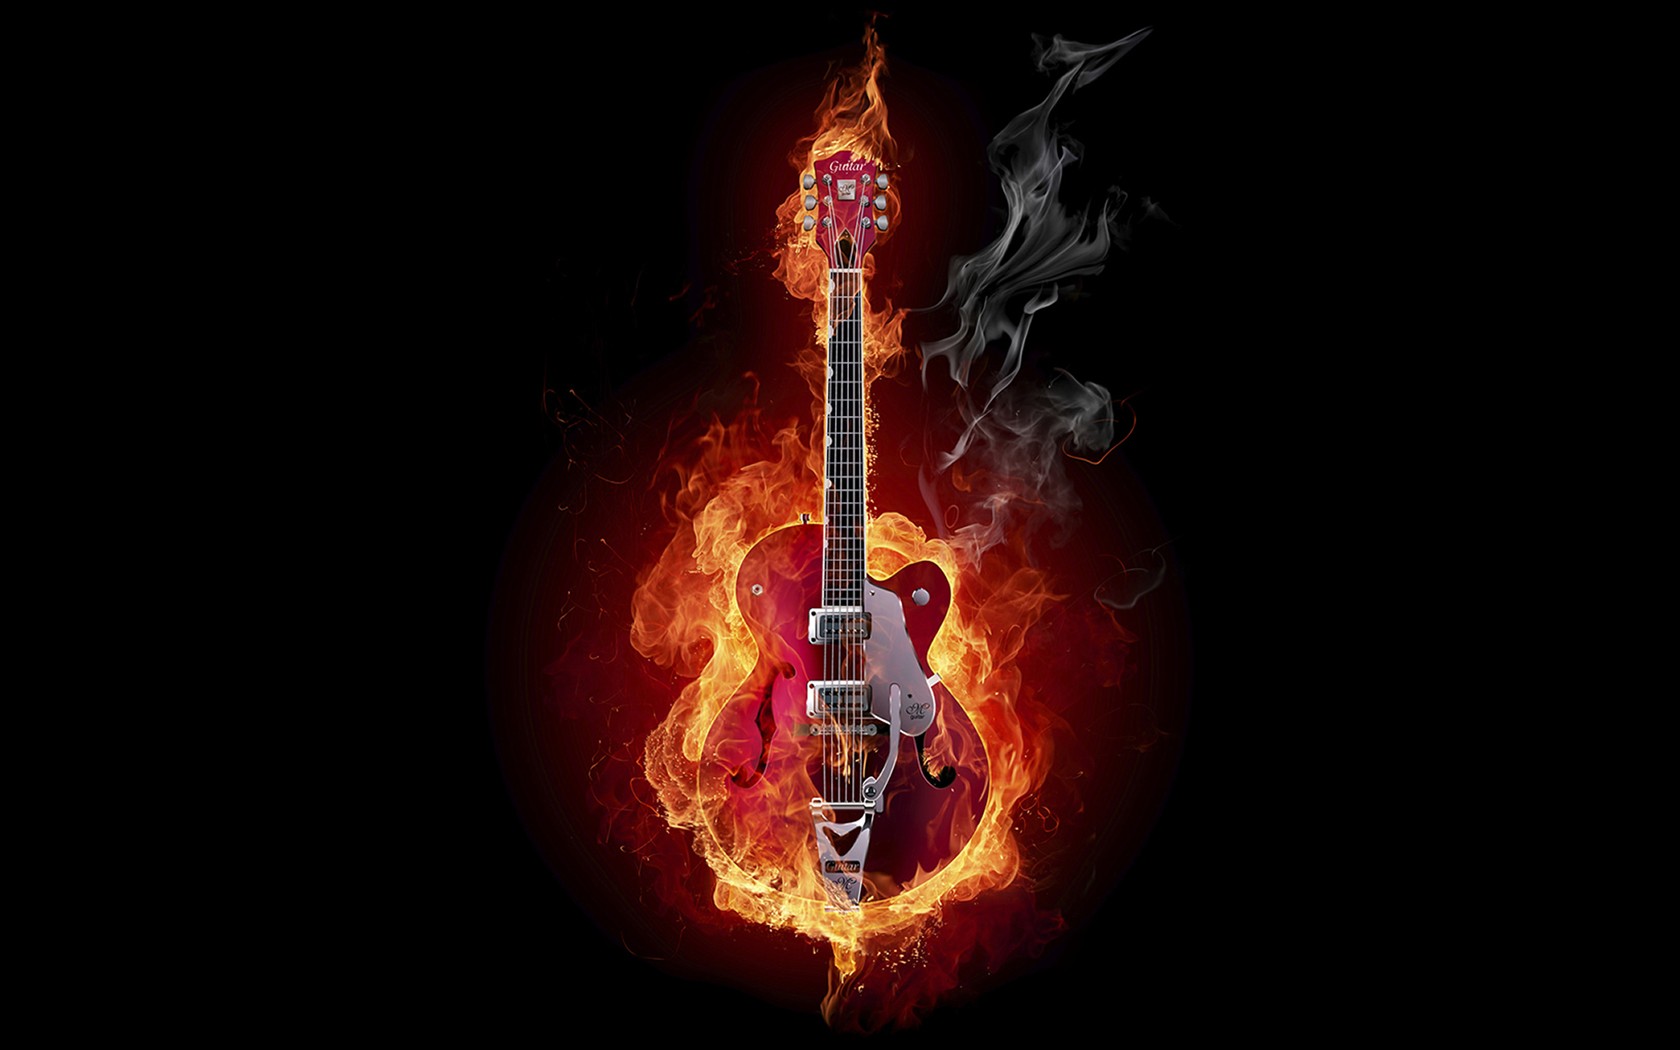 General 1680x1050 musical instrument fire digital art Flame Painter guitar burning simple background black background